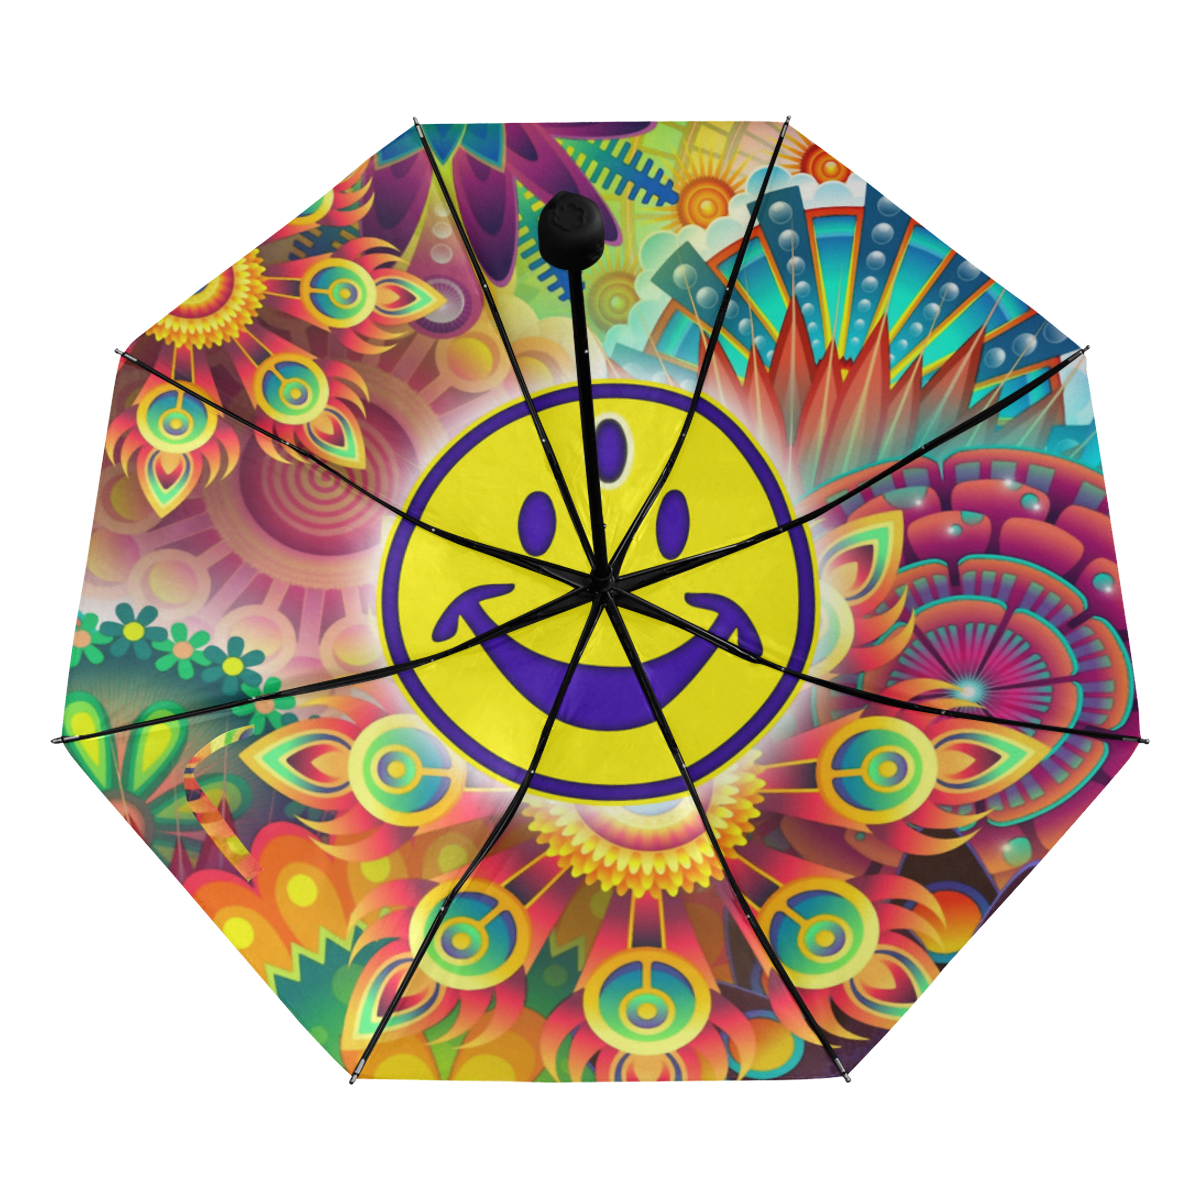 Flower Power Third Eye Smiley Painting Anti-UV Foldable Umbrella (Underside Printing) (U07)